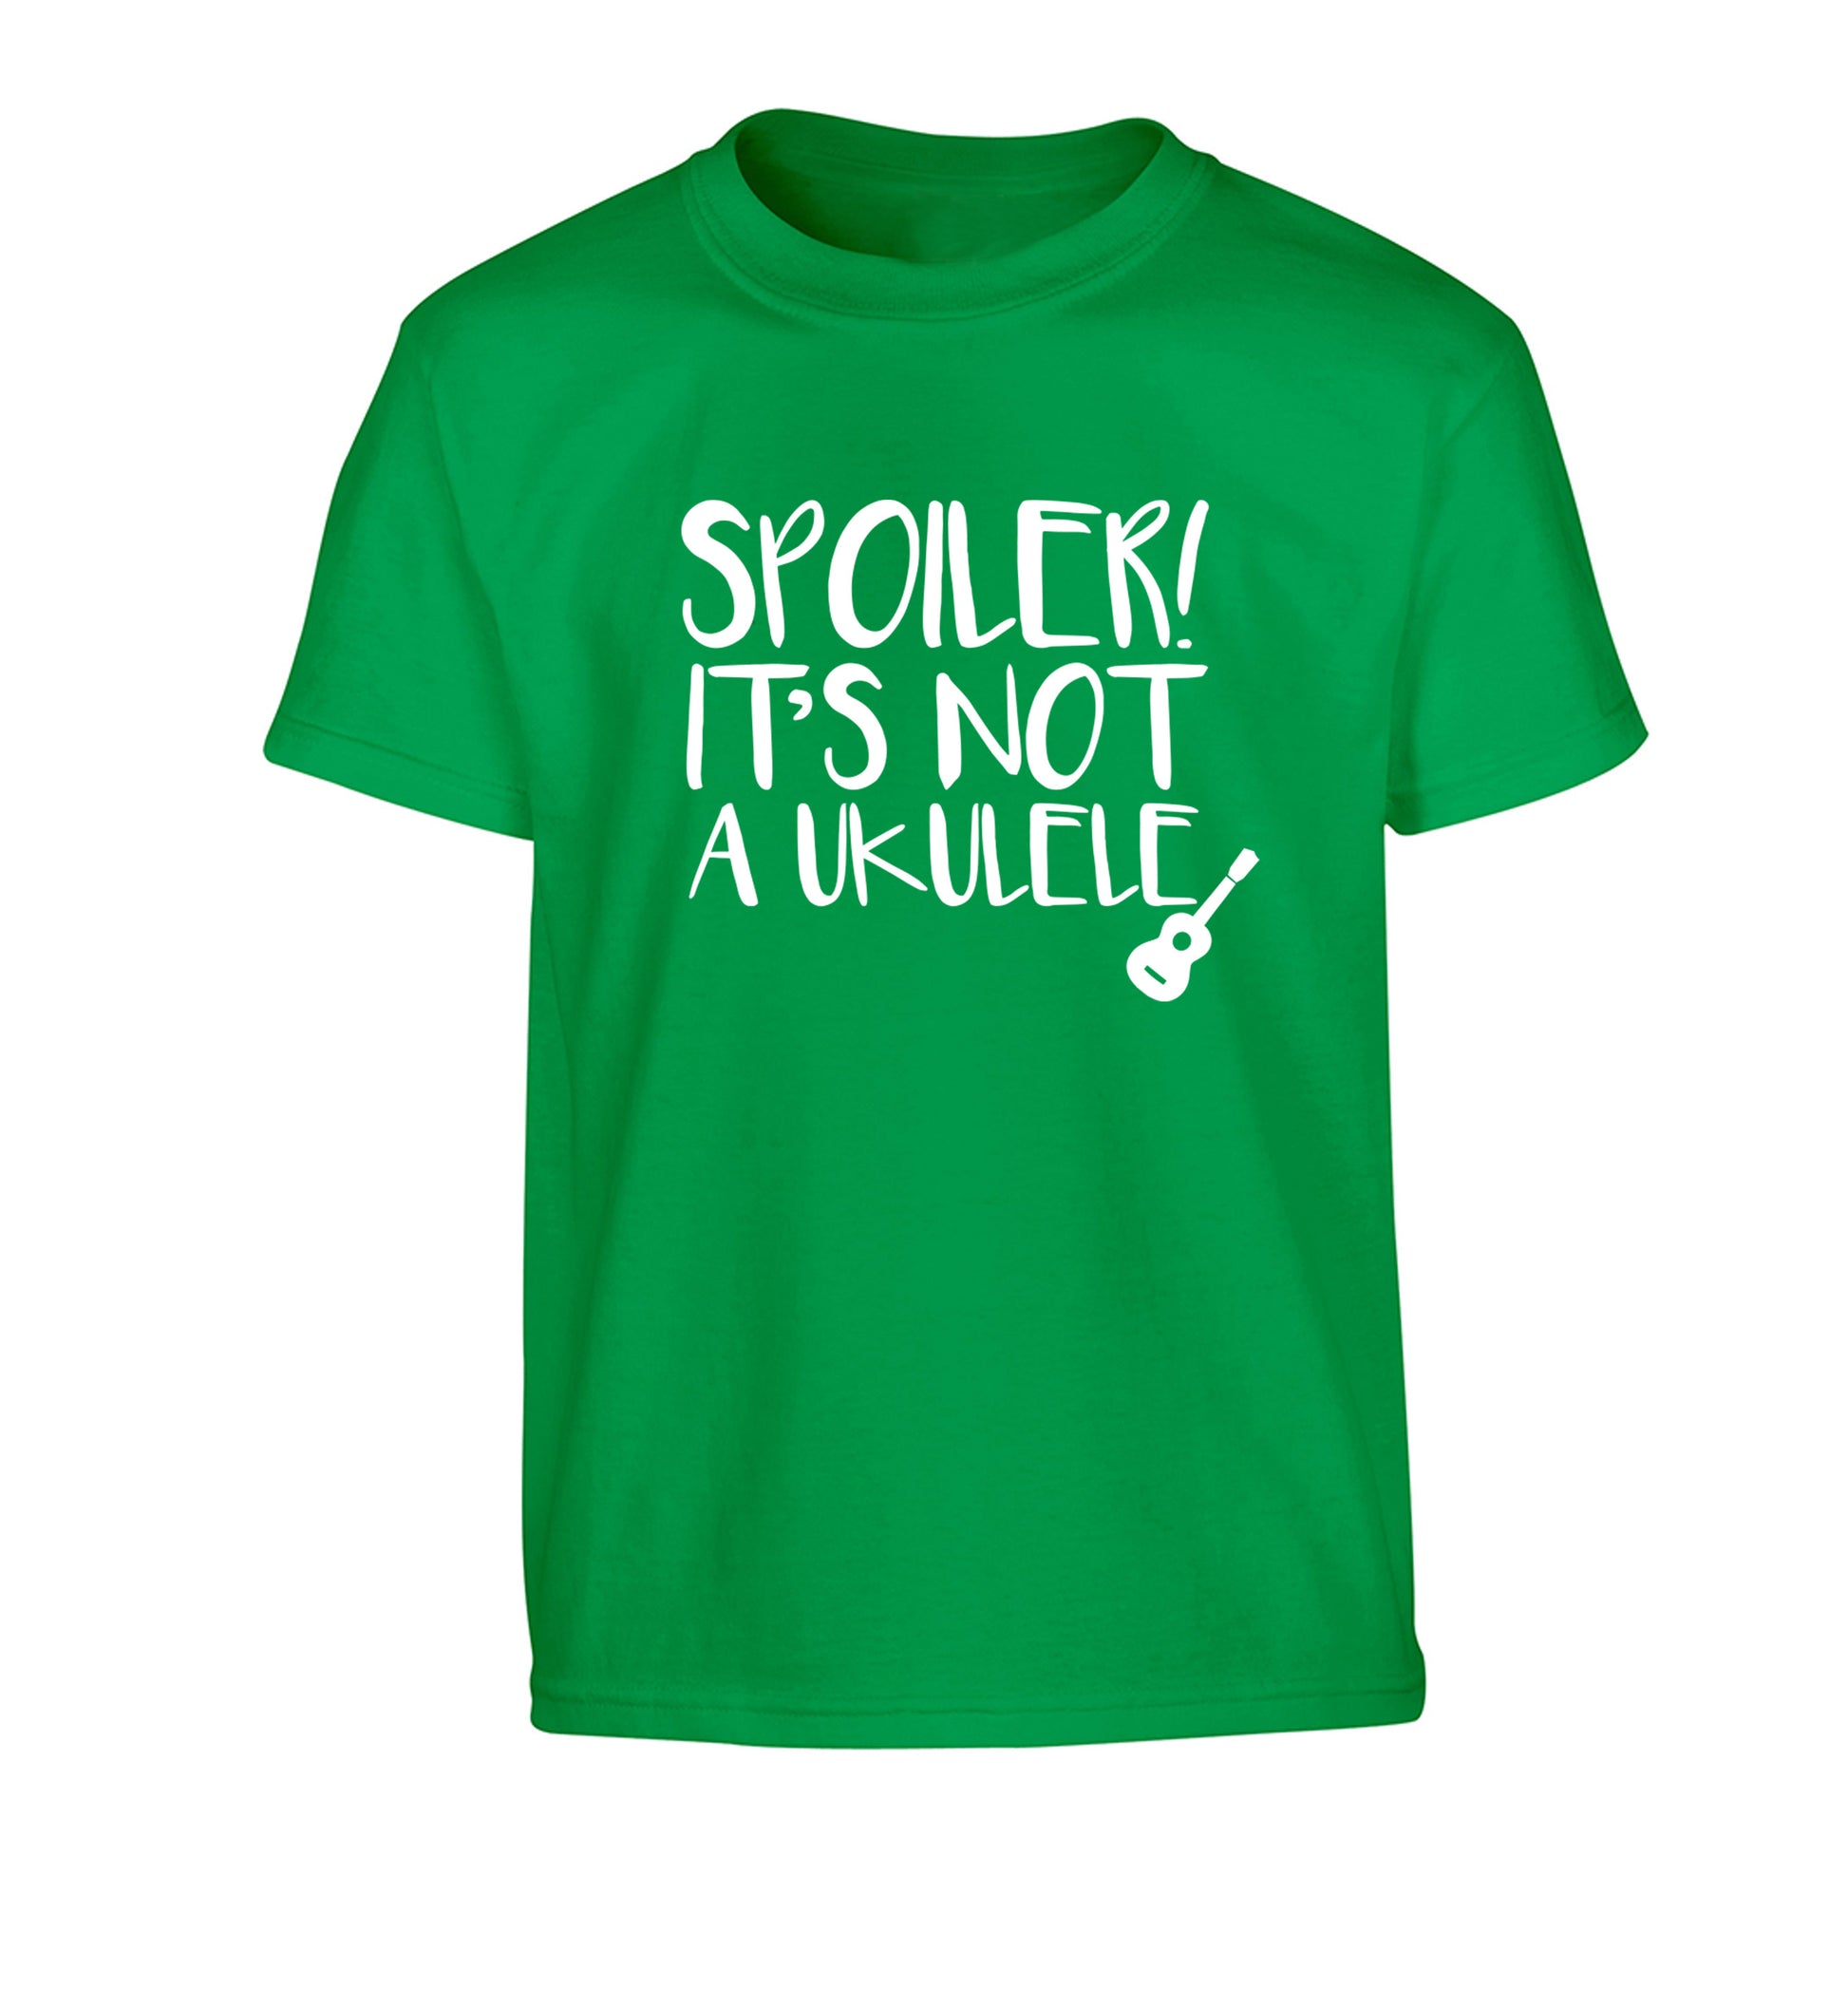 Spoiler it's not a ukulele Children's green Tshirt 12-13 Years